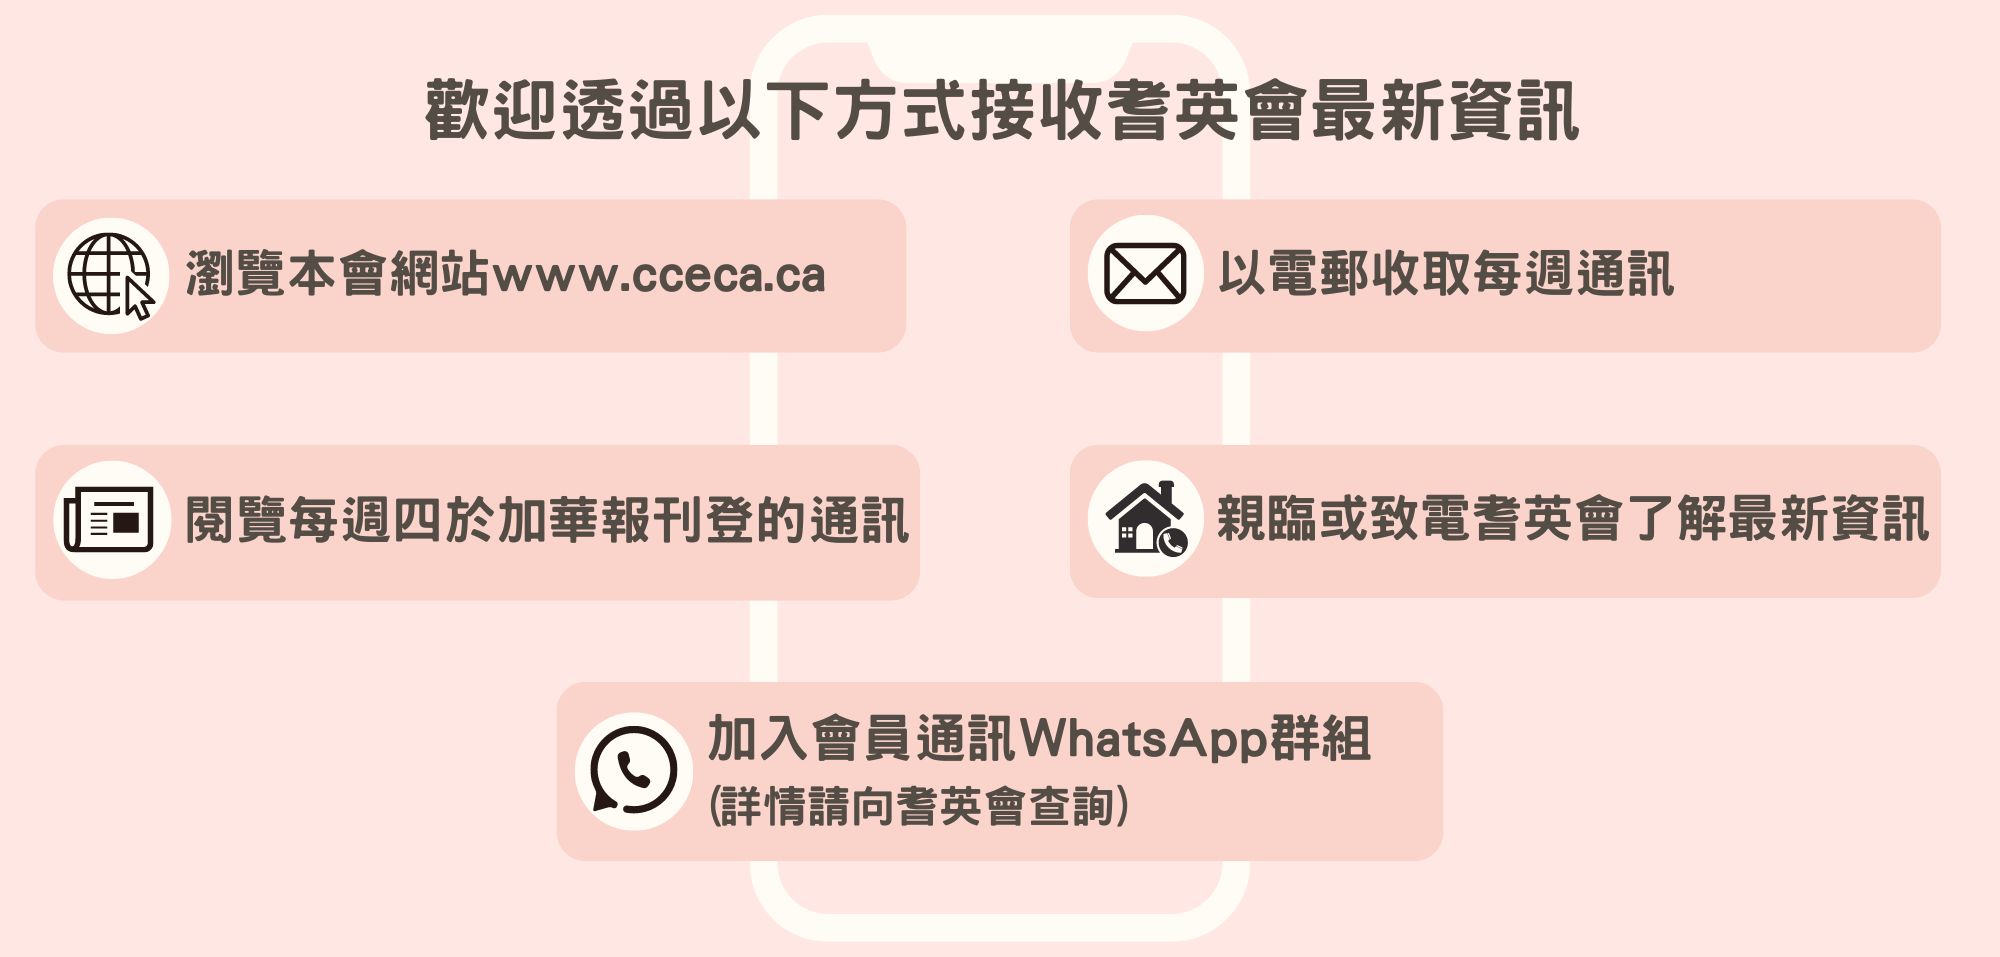 CCECA communication channels .jpg